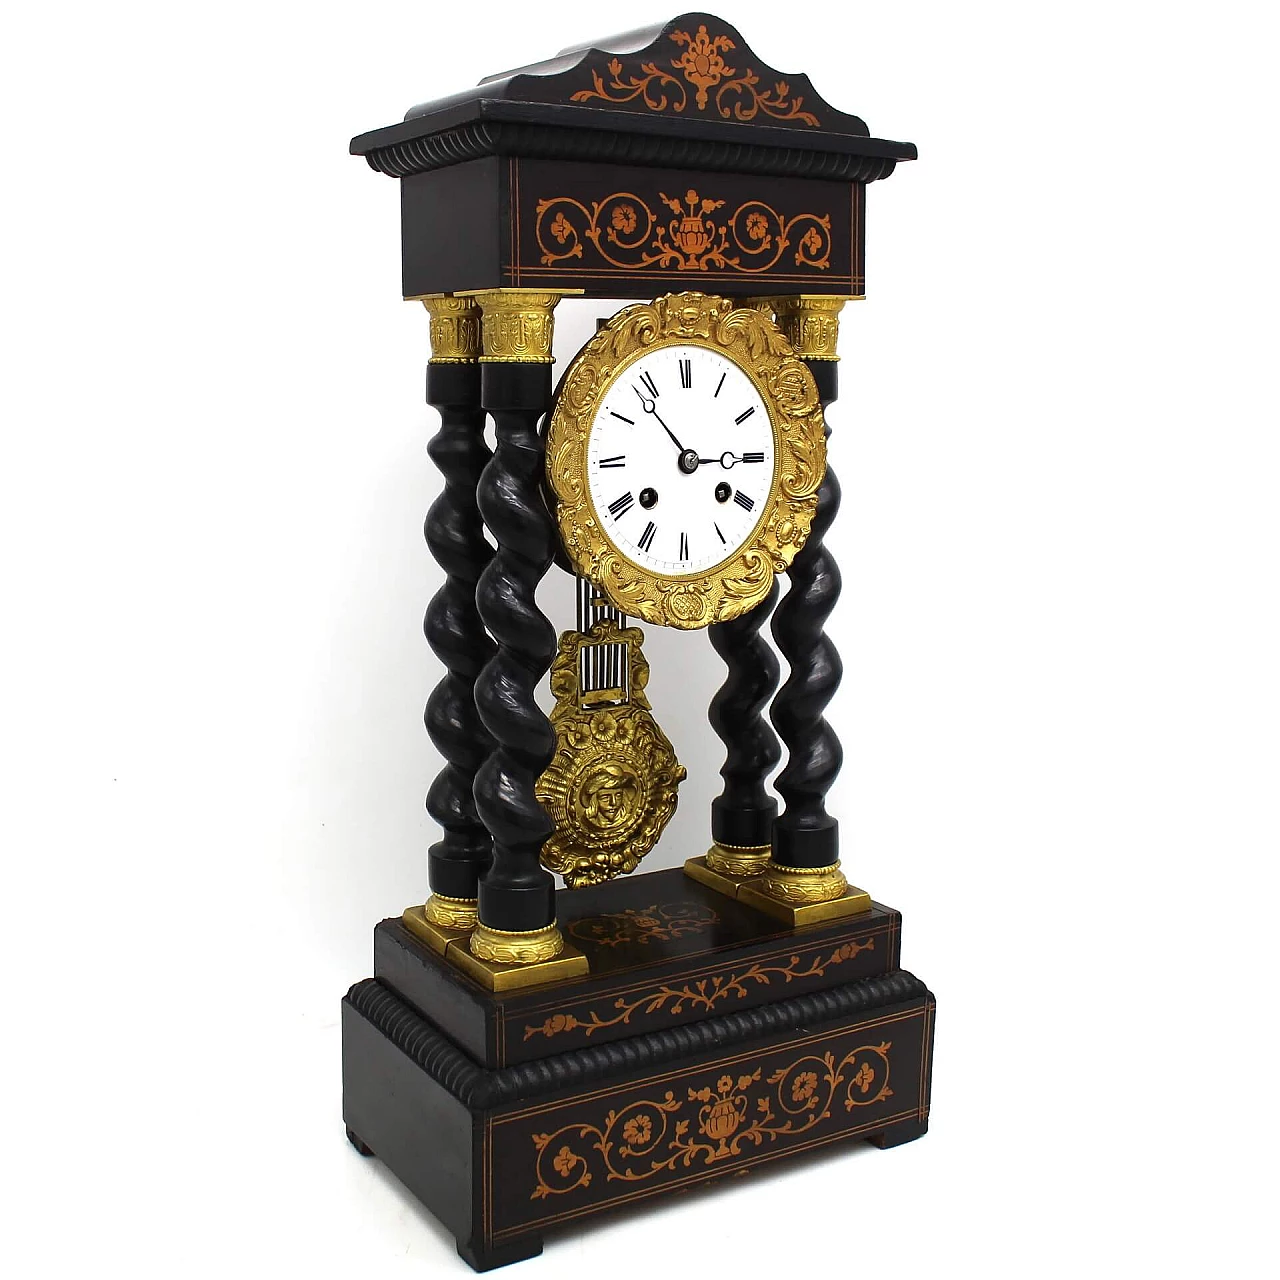 Napoleon III pendulum clock in inlaid ebonized wood and bronze, 19th century 1254236